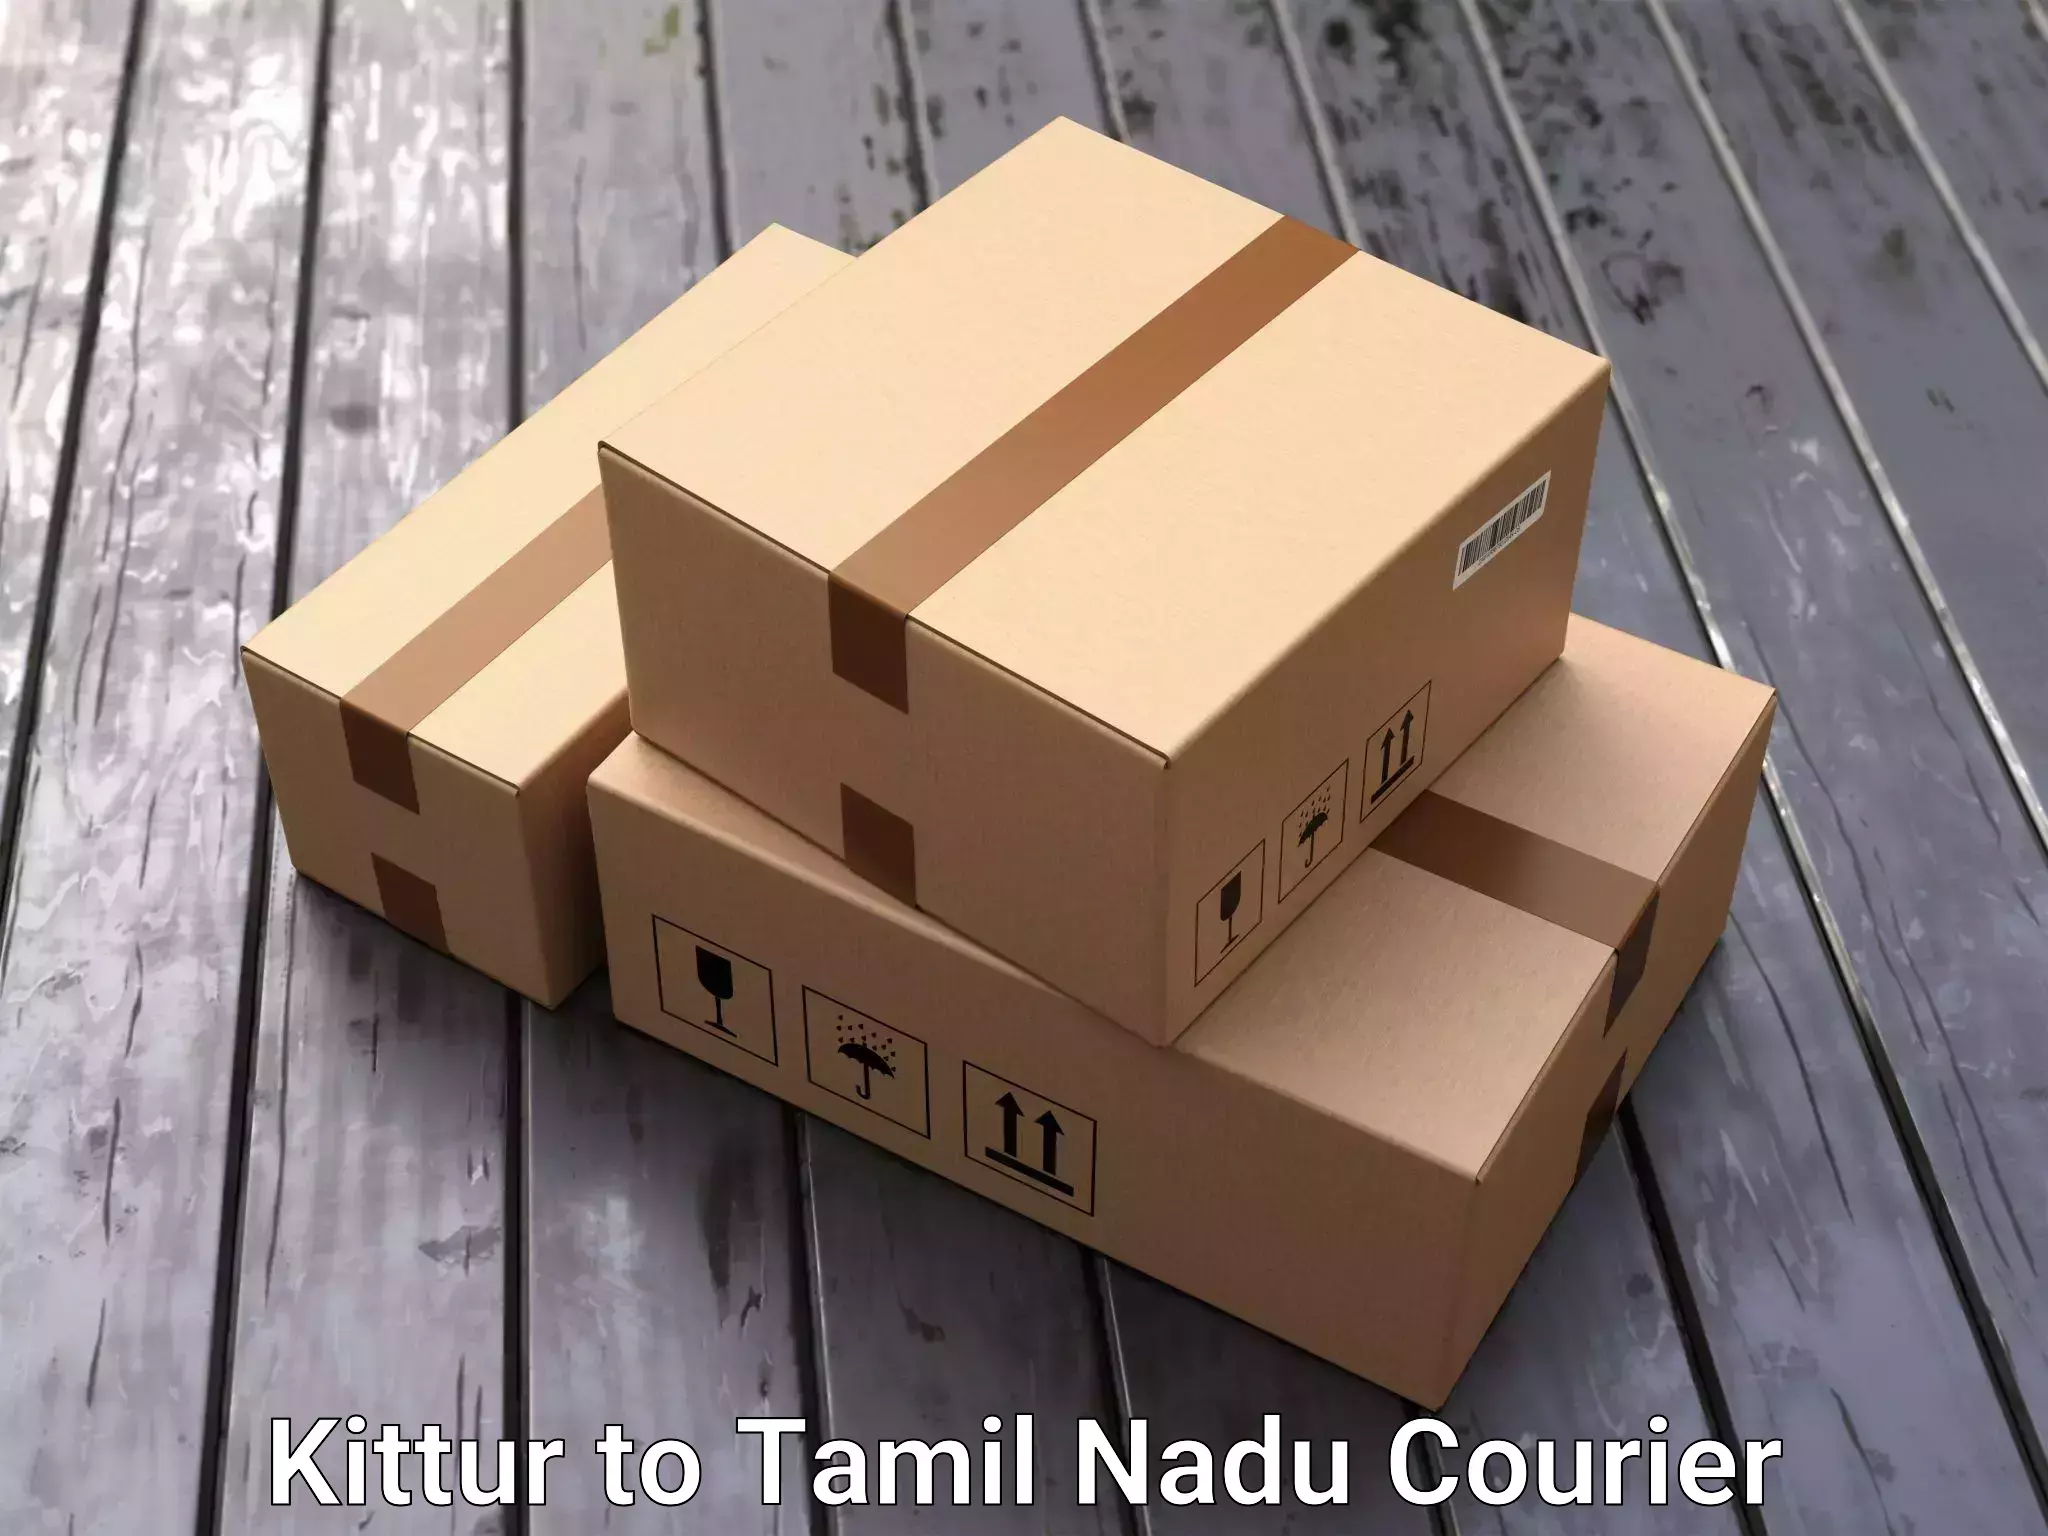 Stress-free household moving Kittur to Tirupur